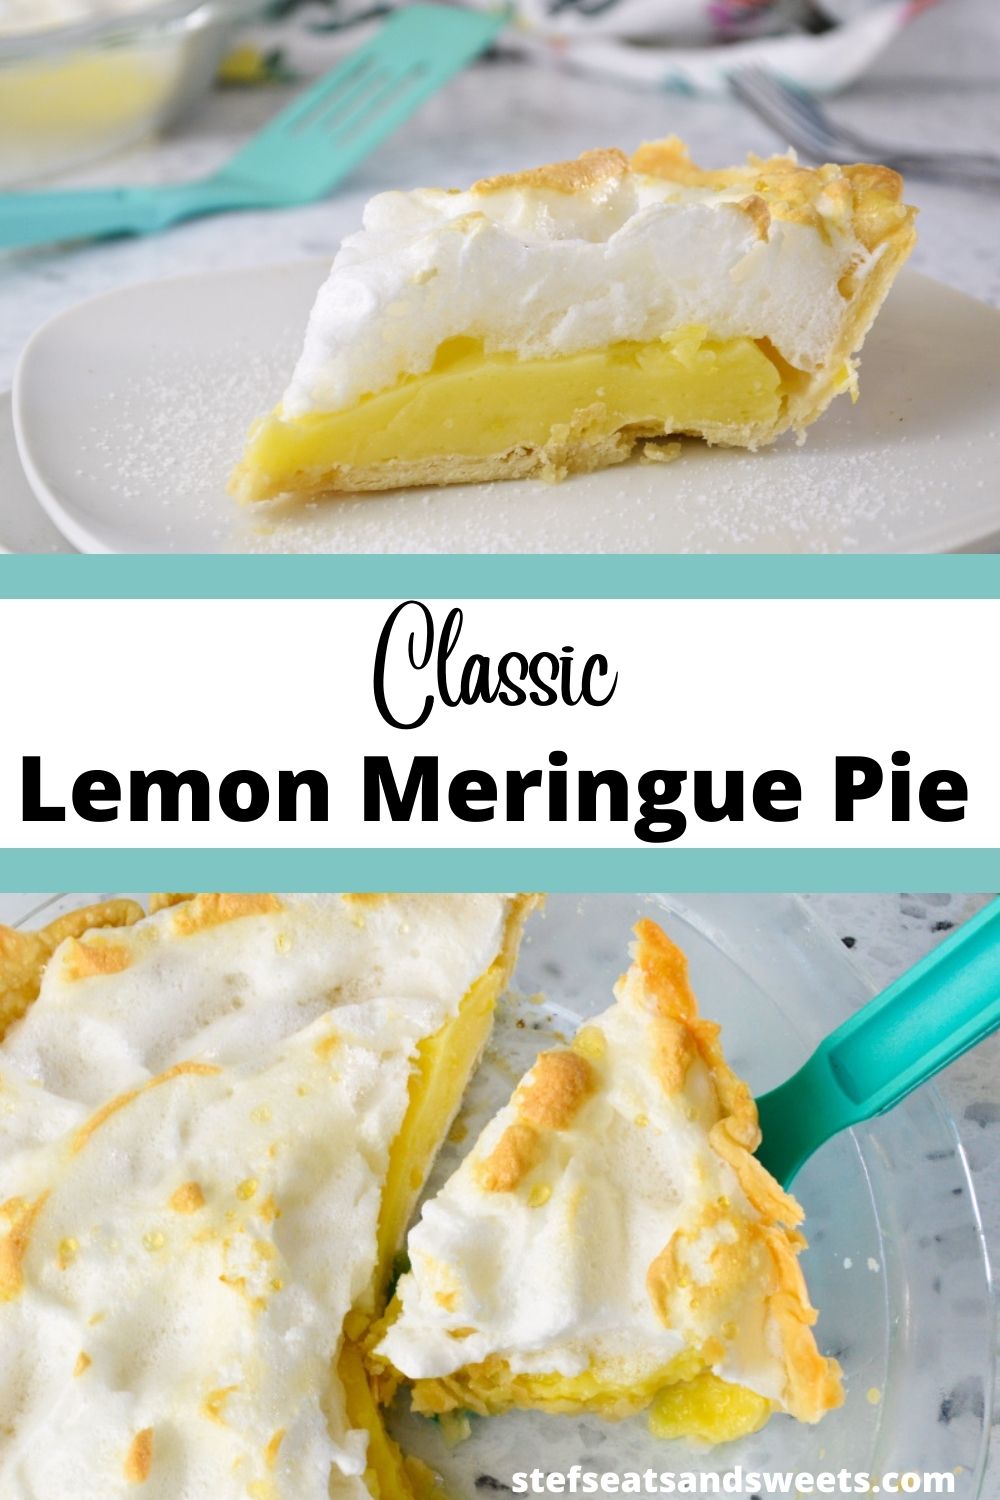 How to make a classic lemon meringue pie